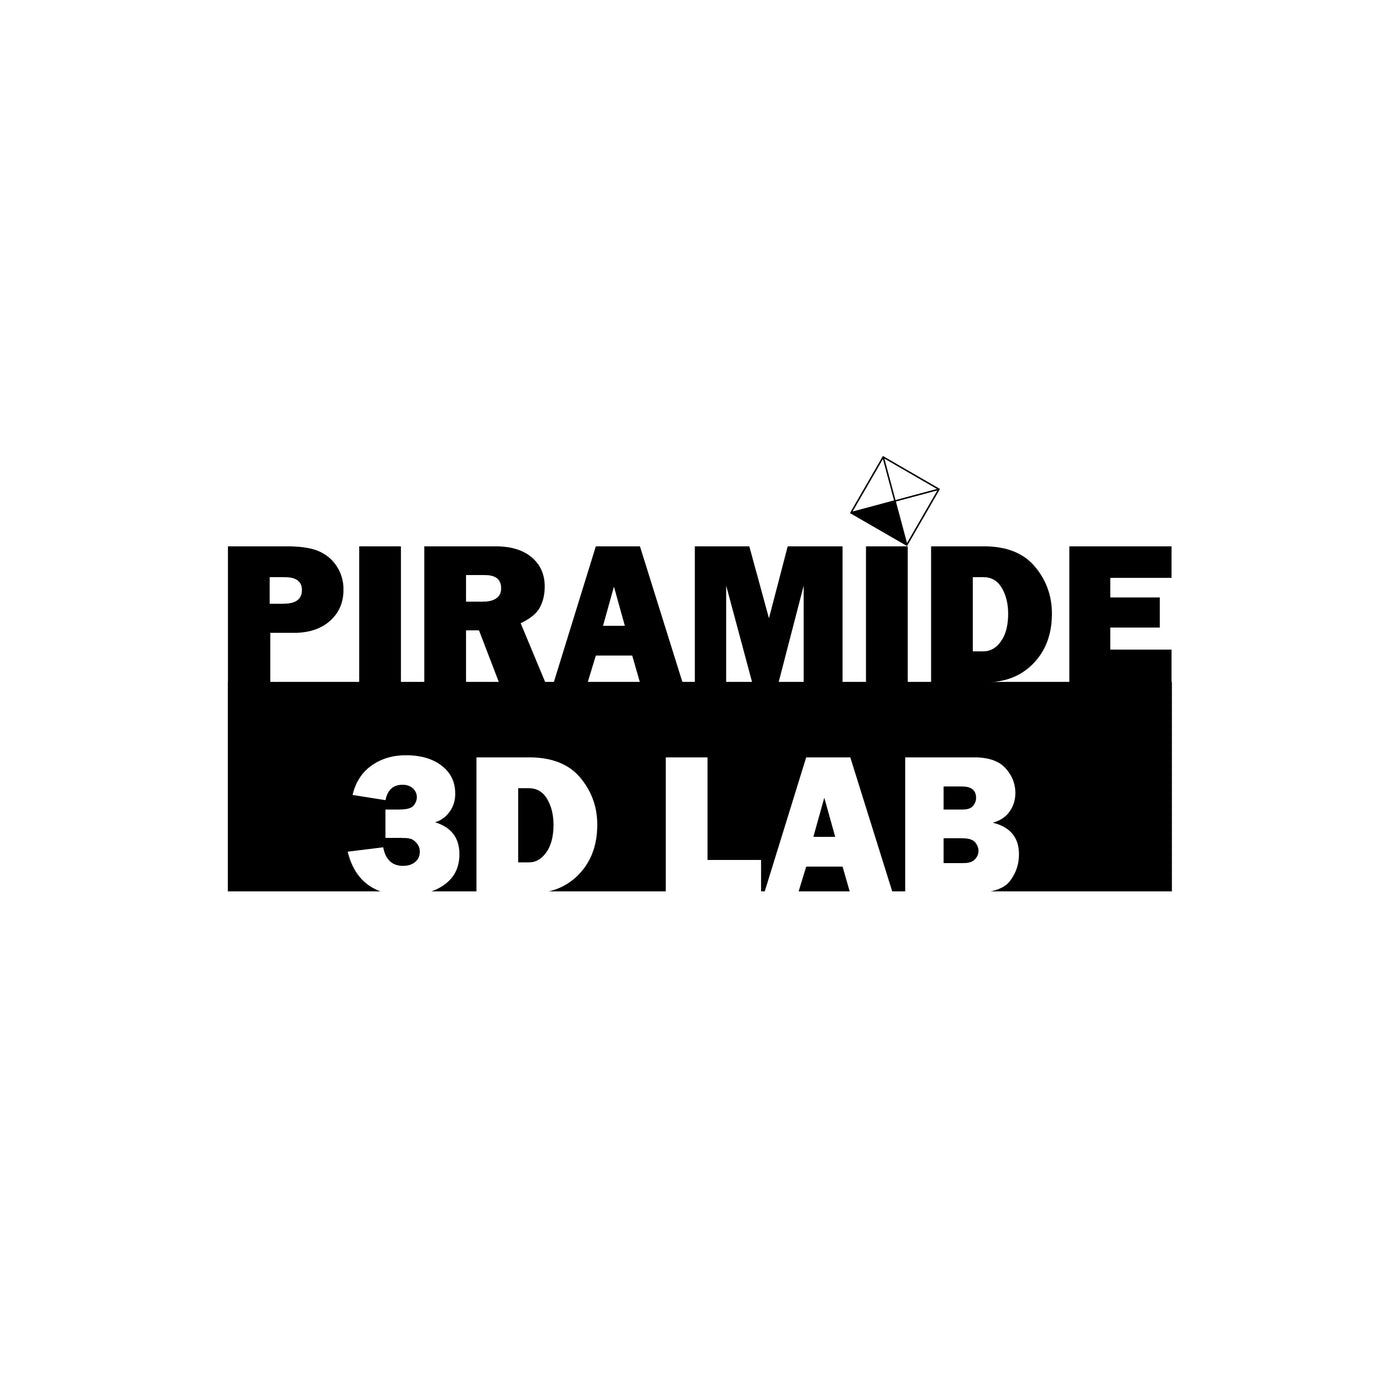 PIRAMIDE 3D LAB